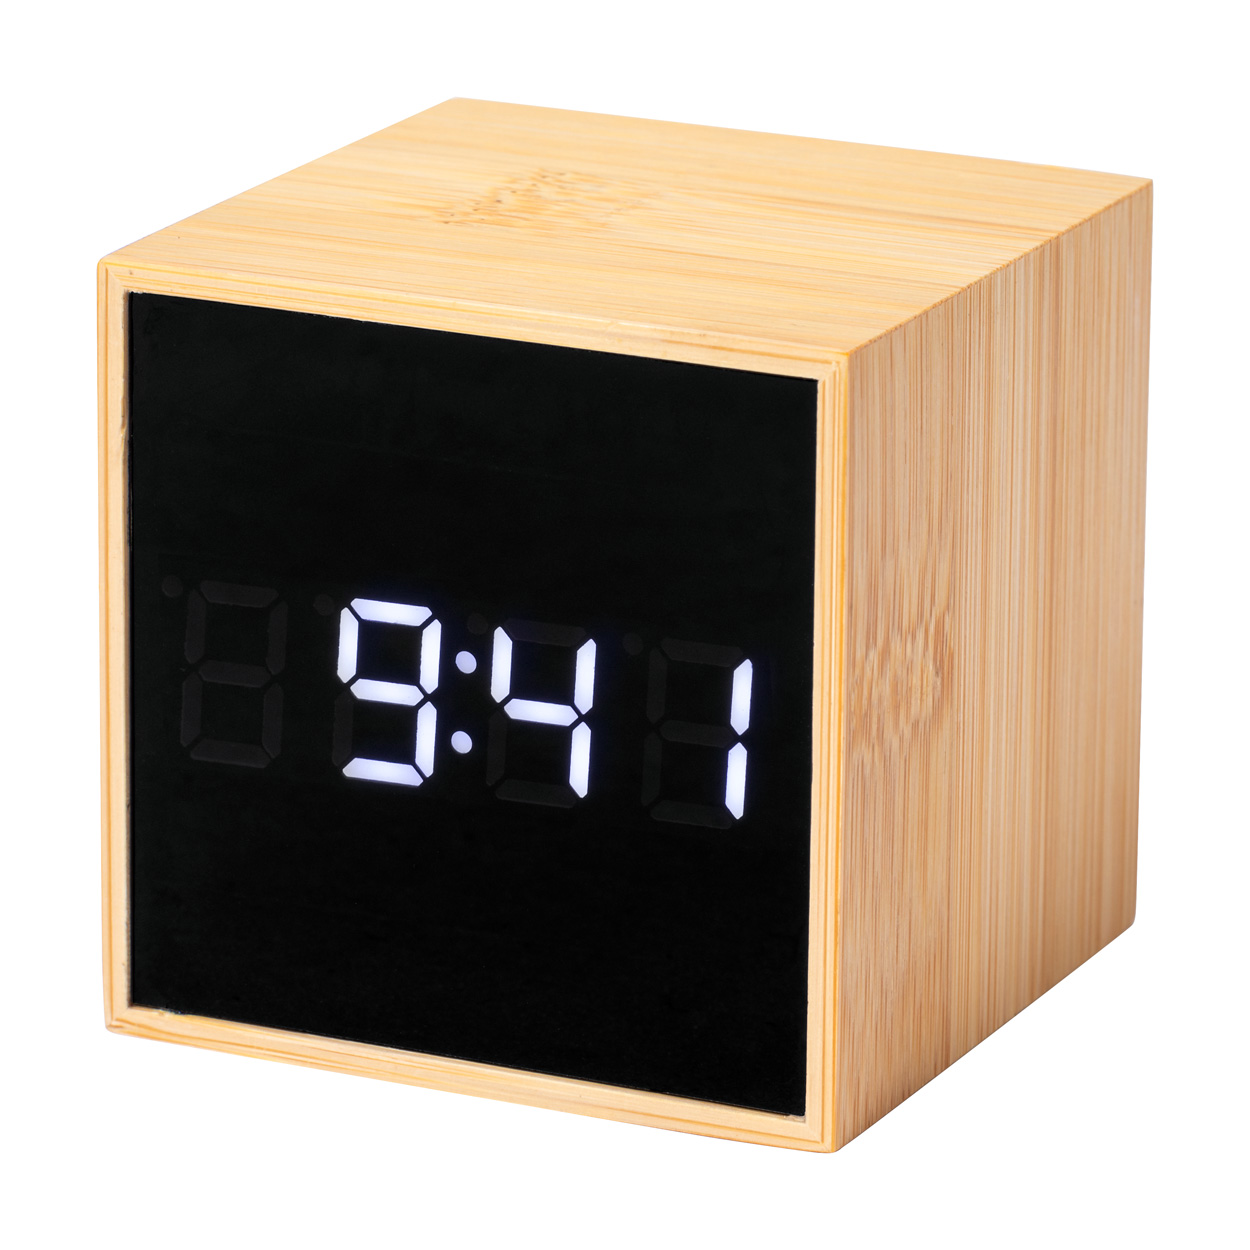 Melbran alarm clock - beige